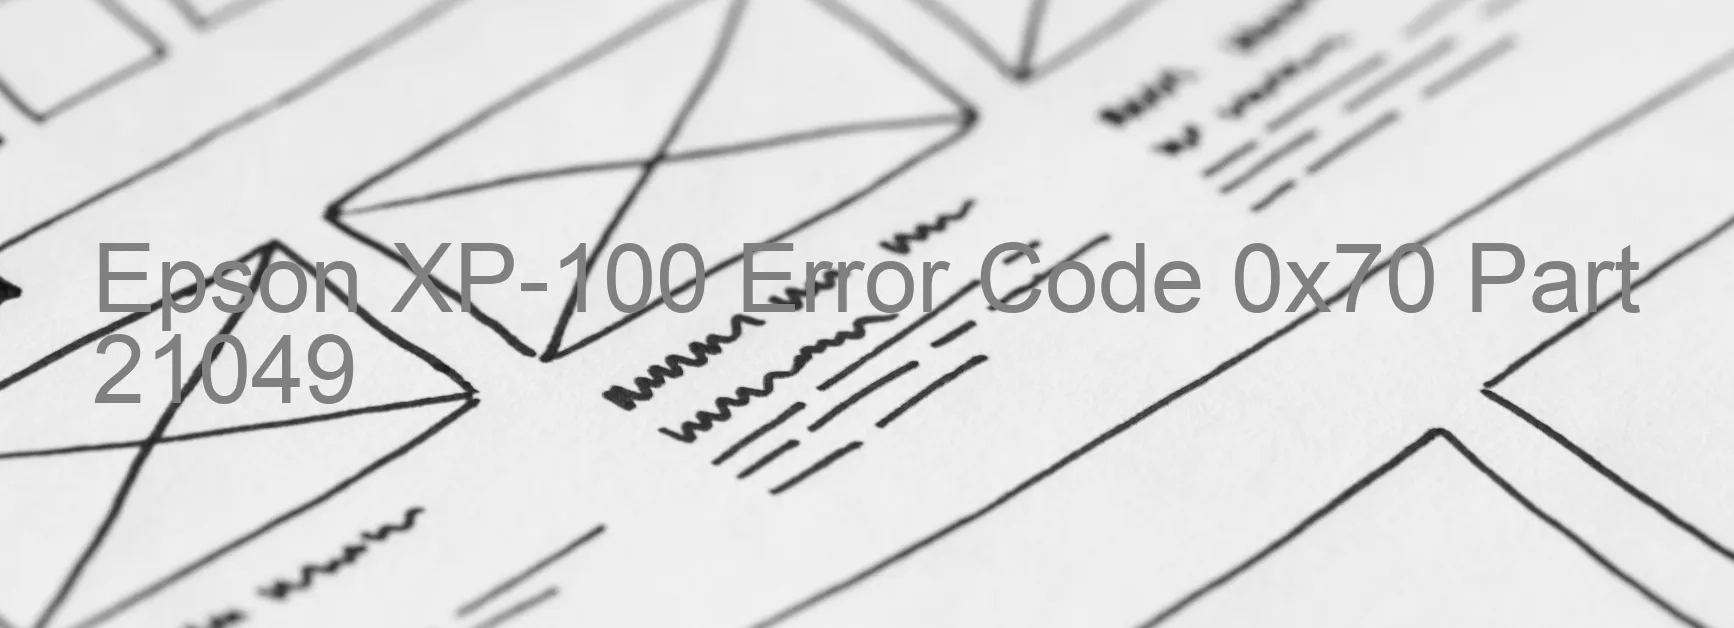 Epson XP-100 Error Code 0x70 Part 21049